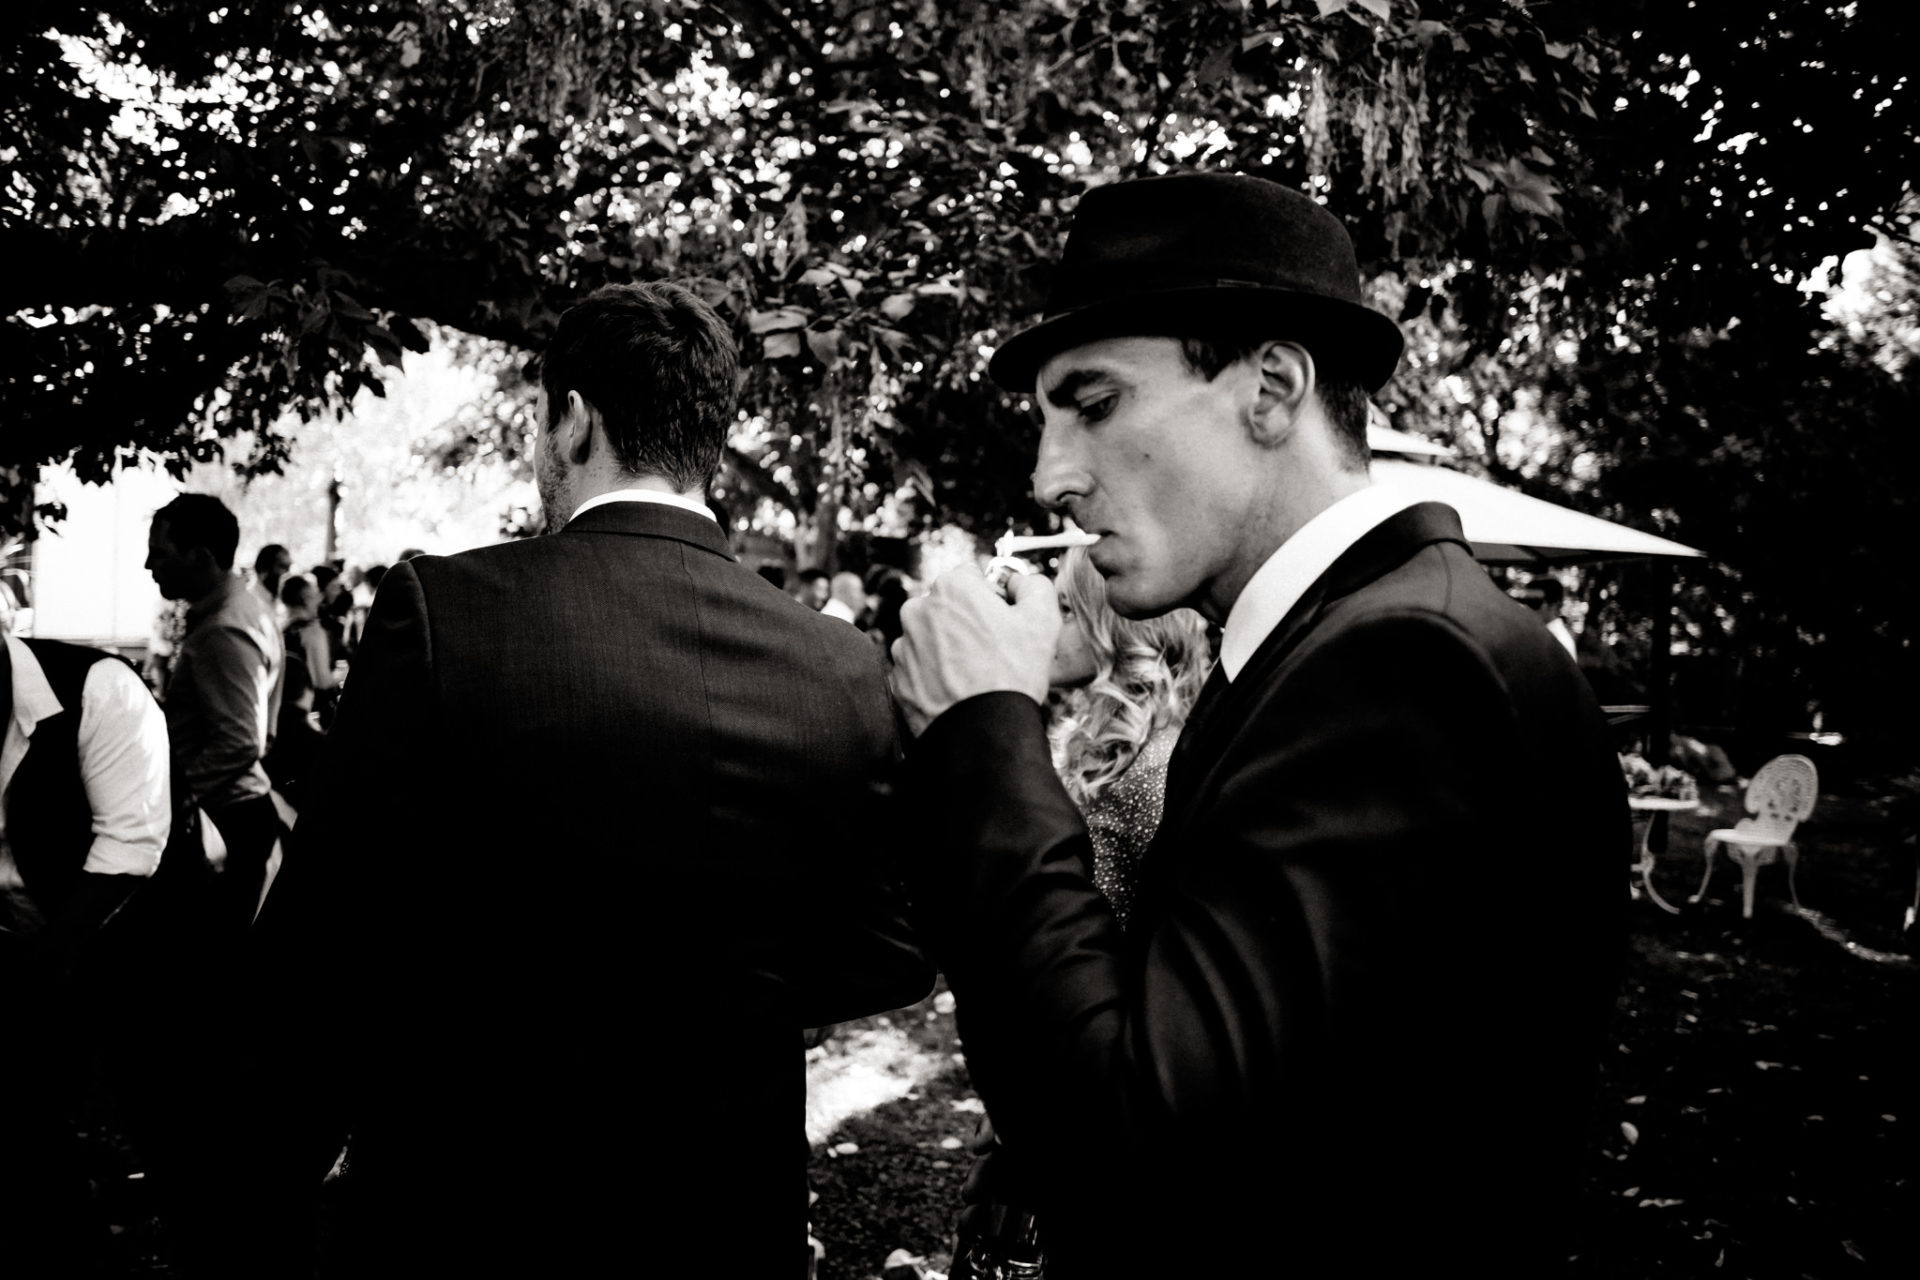 backyard-wedding-australia-melbourne-wedding-guest-smoking-hat-cool-look